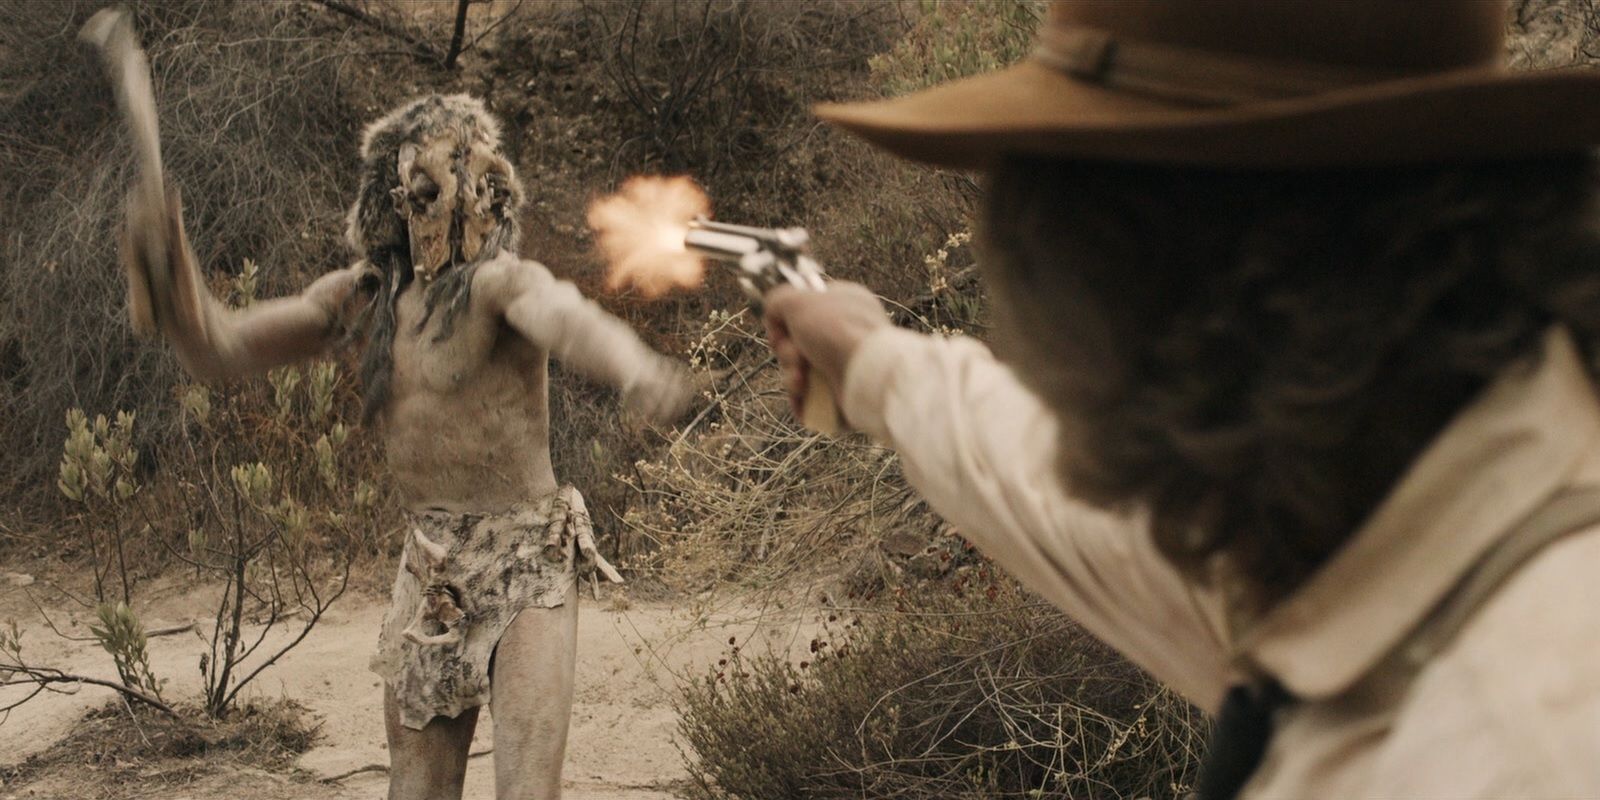 A cowboy shoots a cannibal in Bone Tomahawk